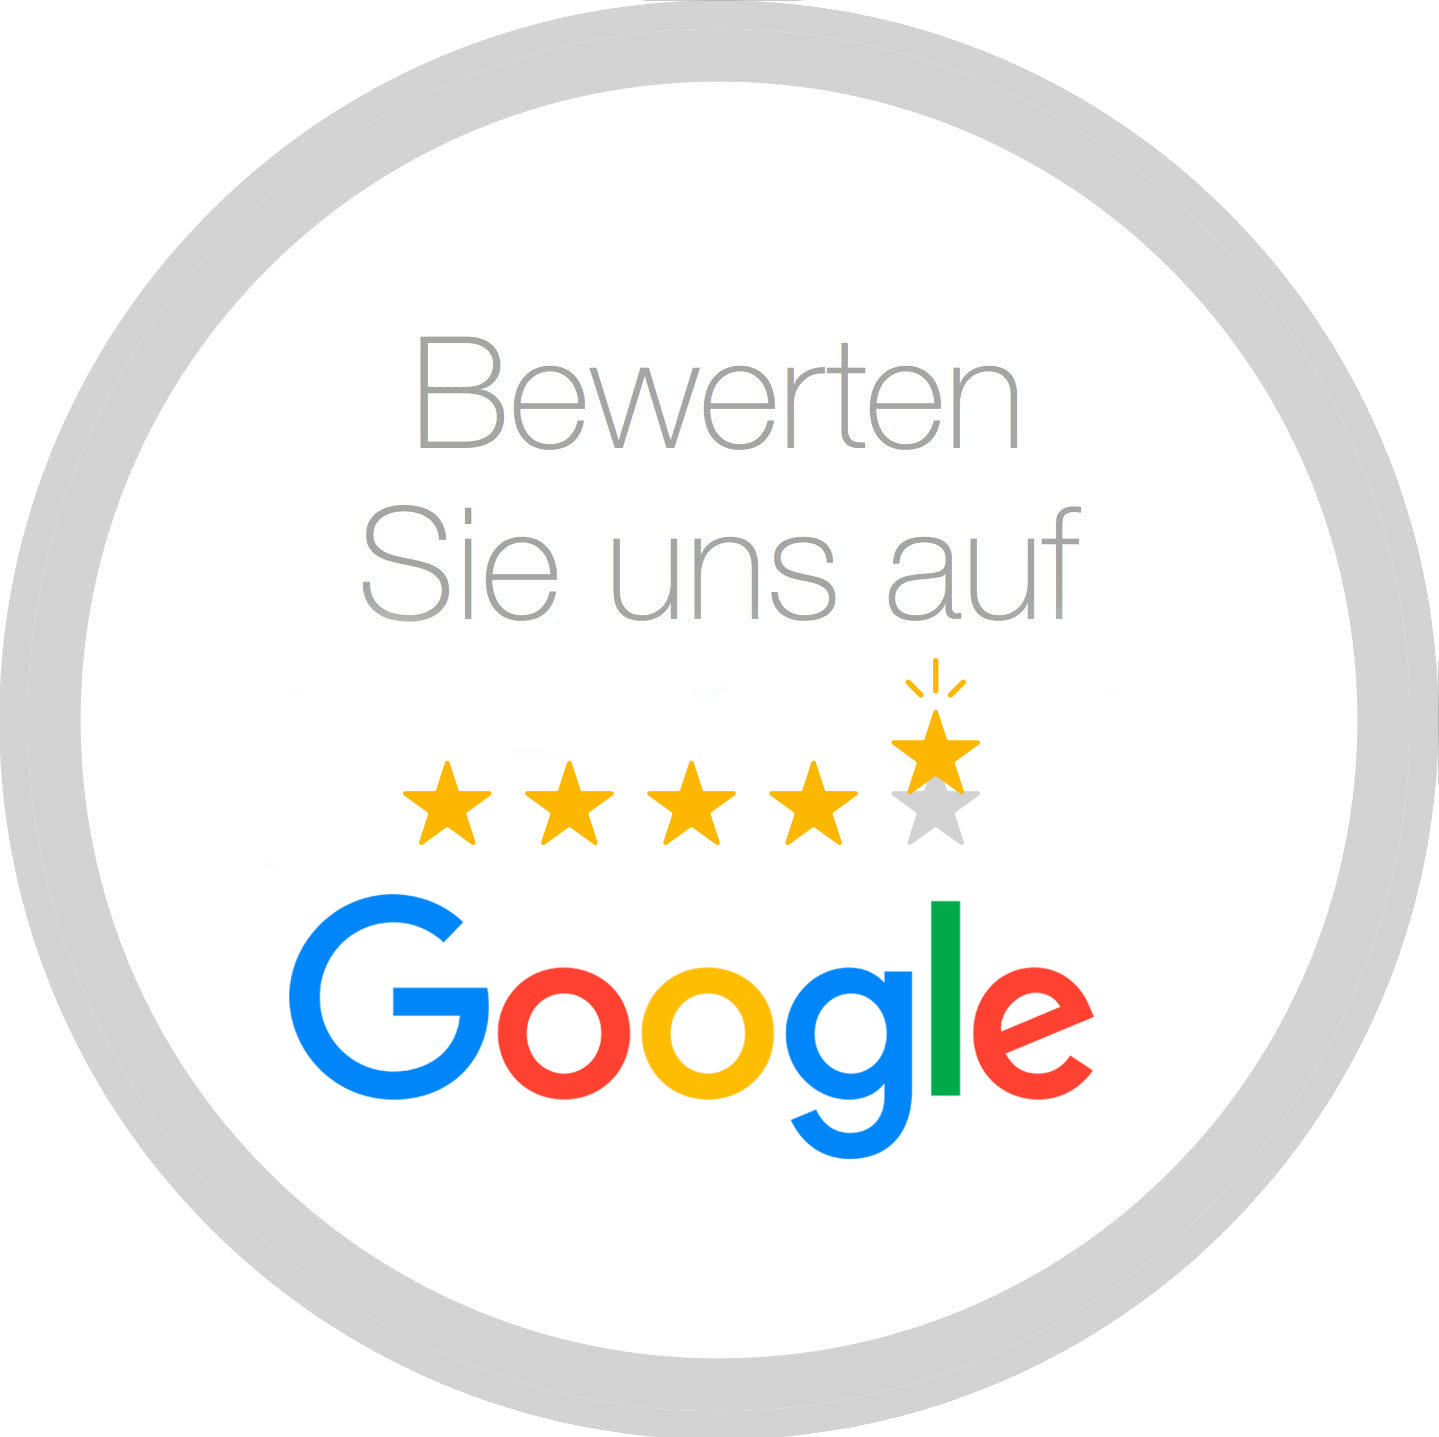 Google Bewertung Synergie Physiotherapie Berlin